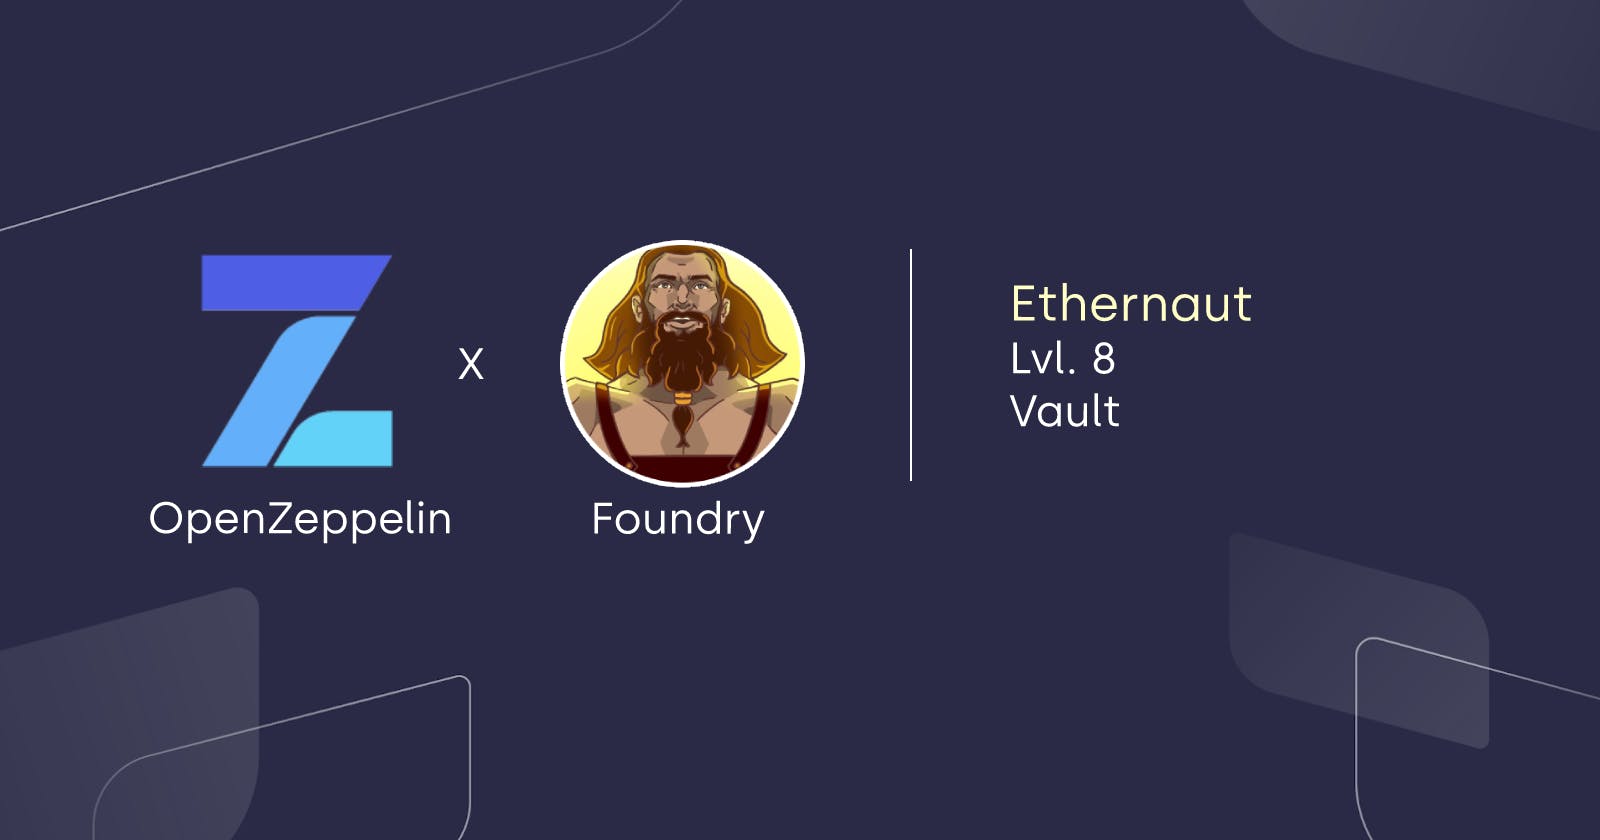 Ethereum x Foundry - 0x8 Vault